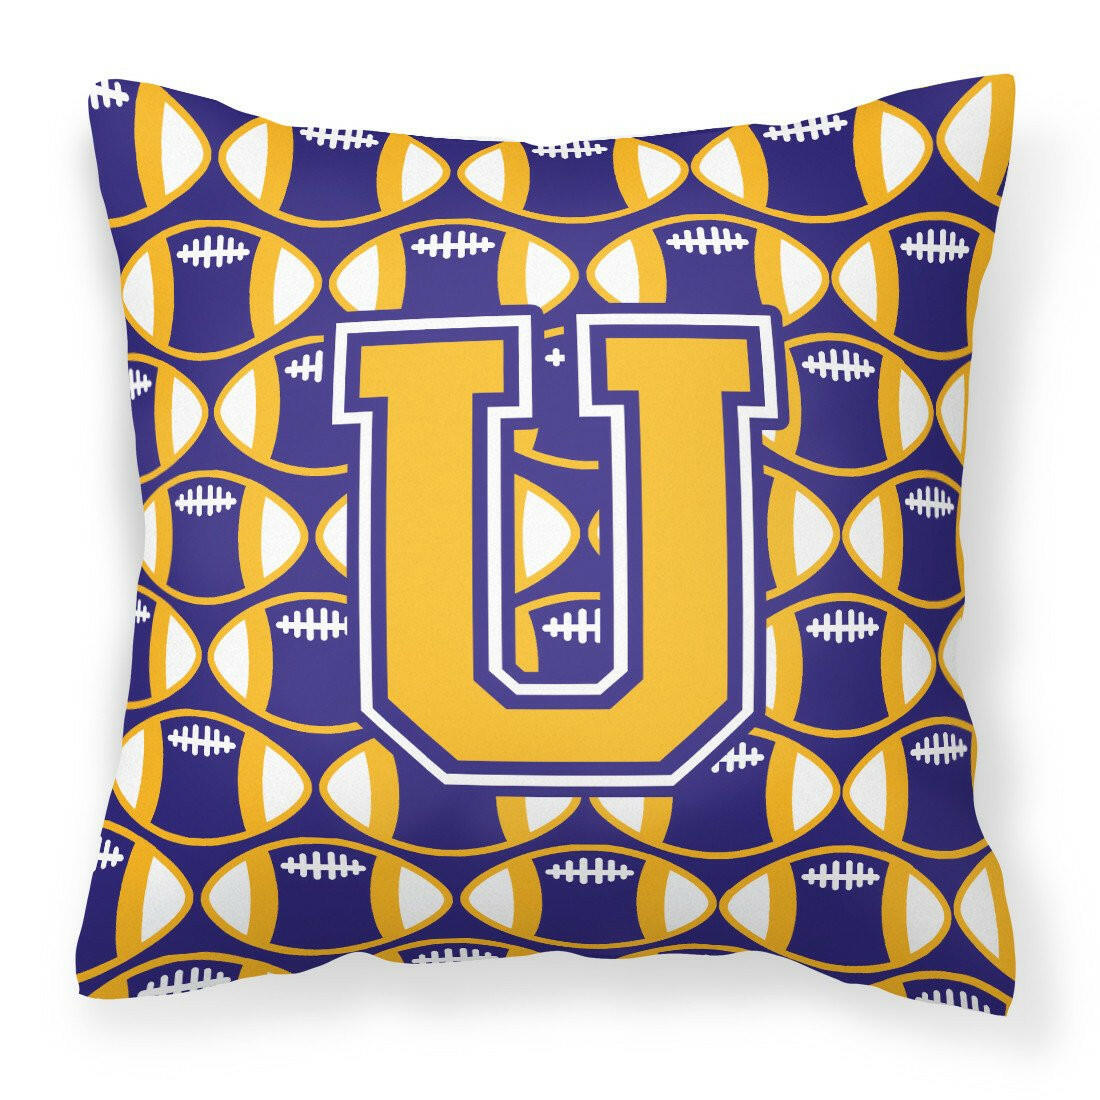 Letter U Football Purple and Gold Fabric Decorative Pillow CJ1064-UPW1414 by Caroline's Treasures